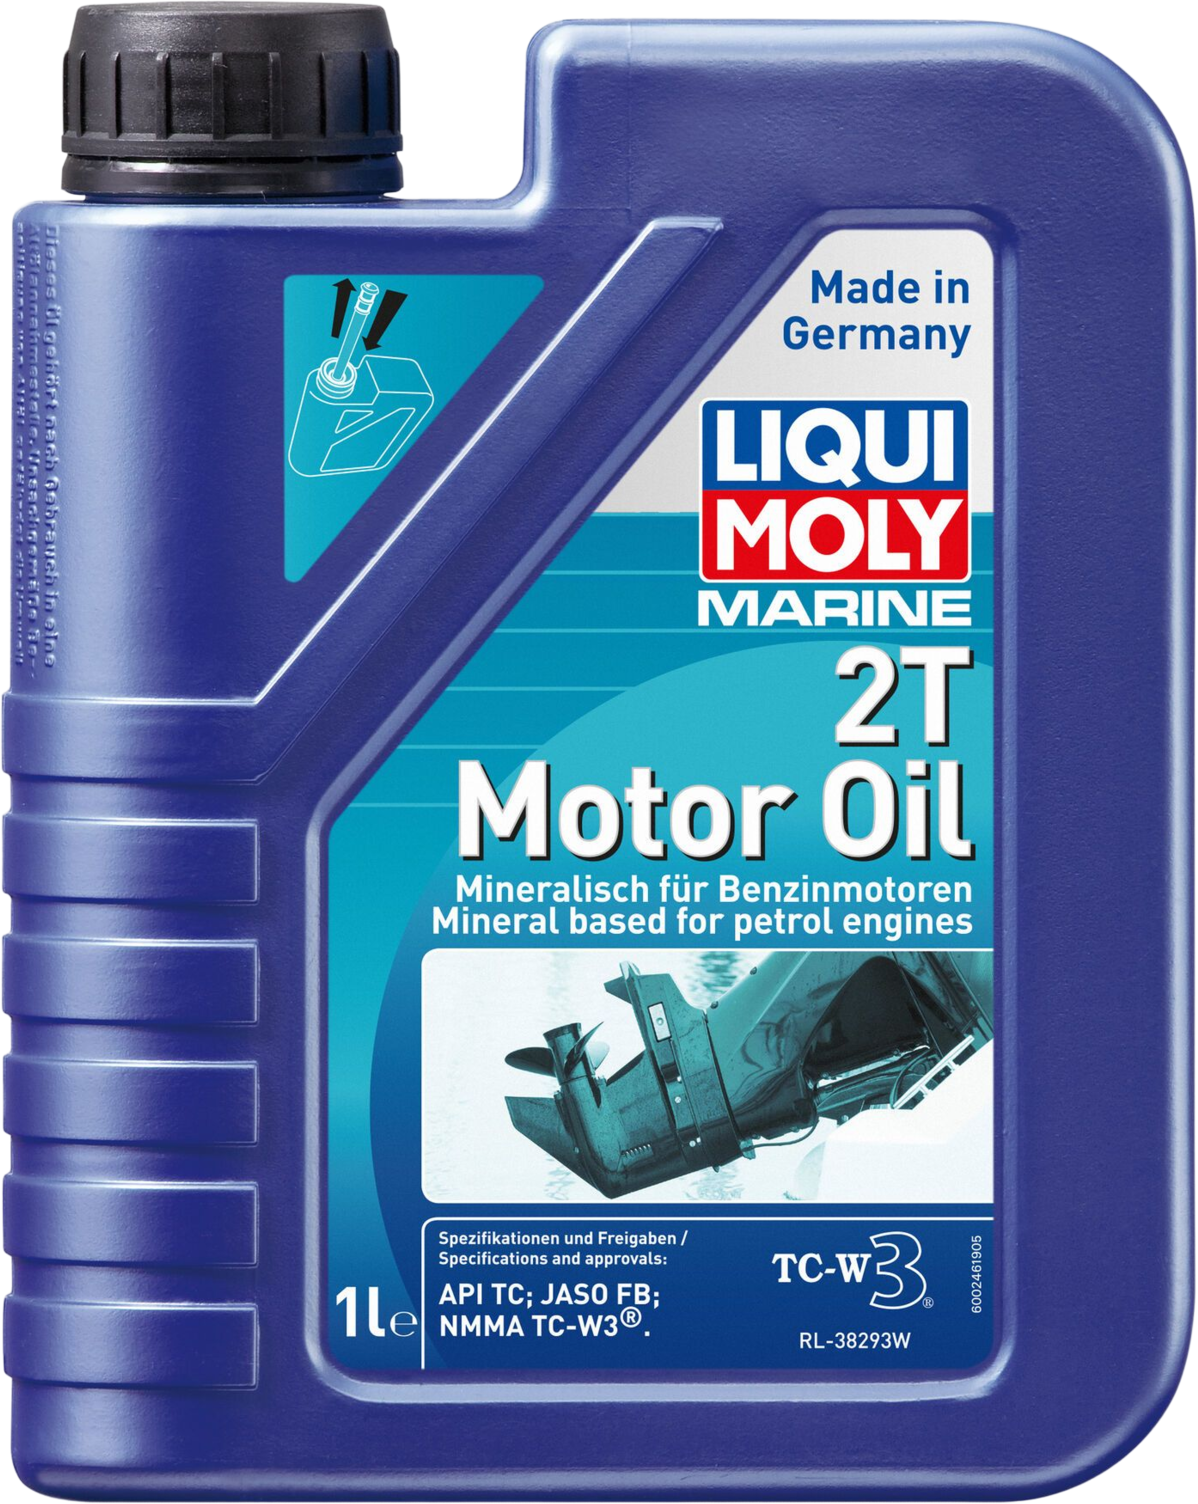 Liqui Moly Marine 2T Motor Oil, 1 lt